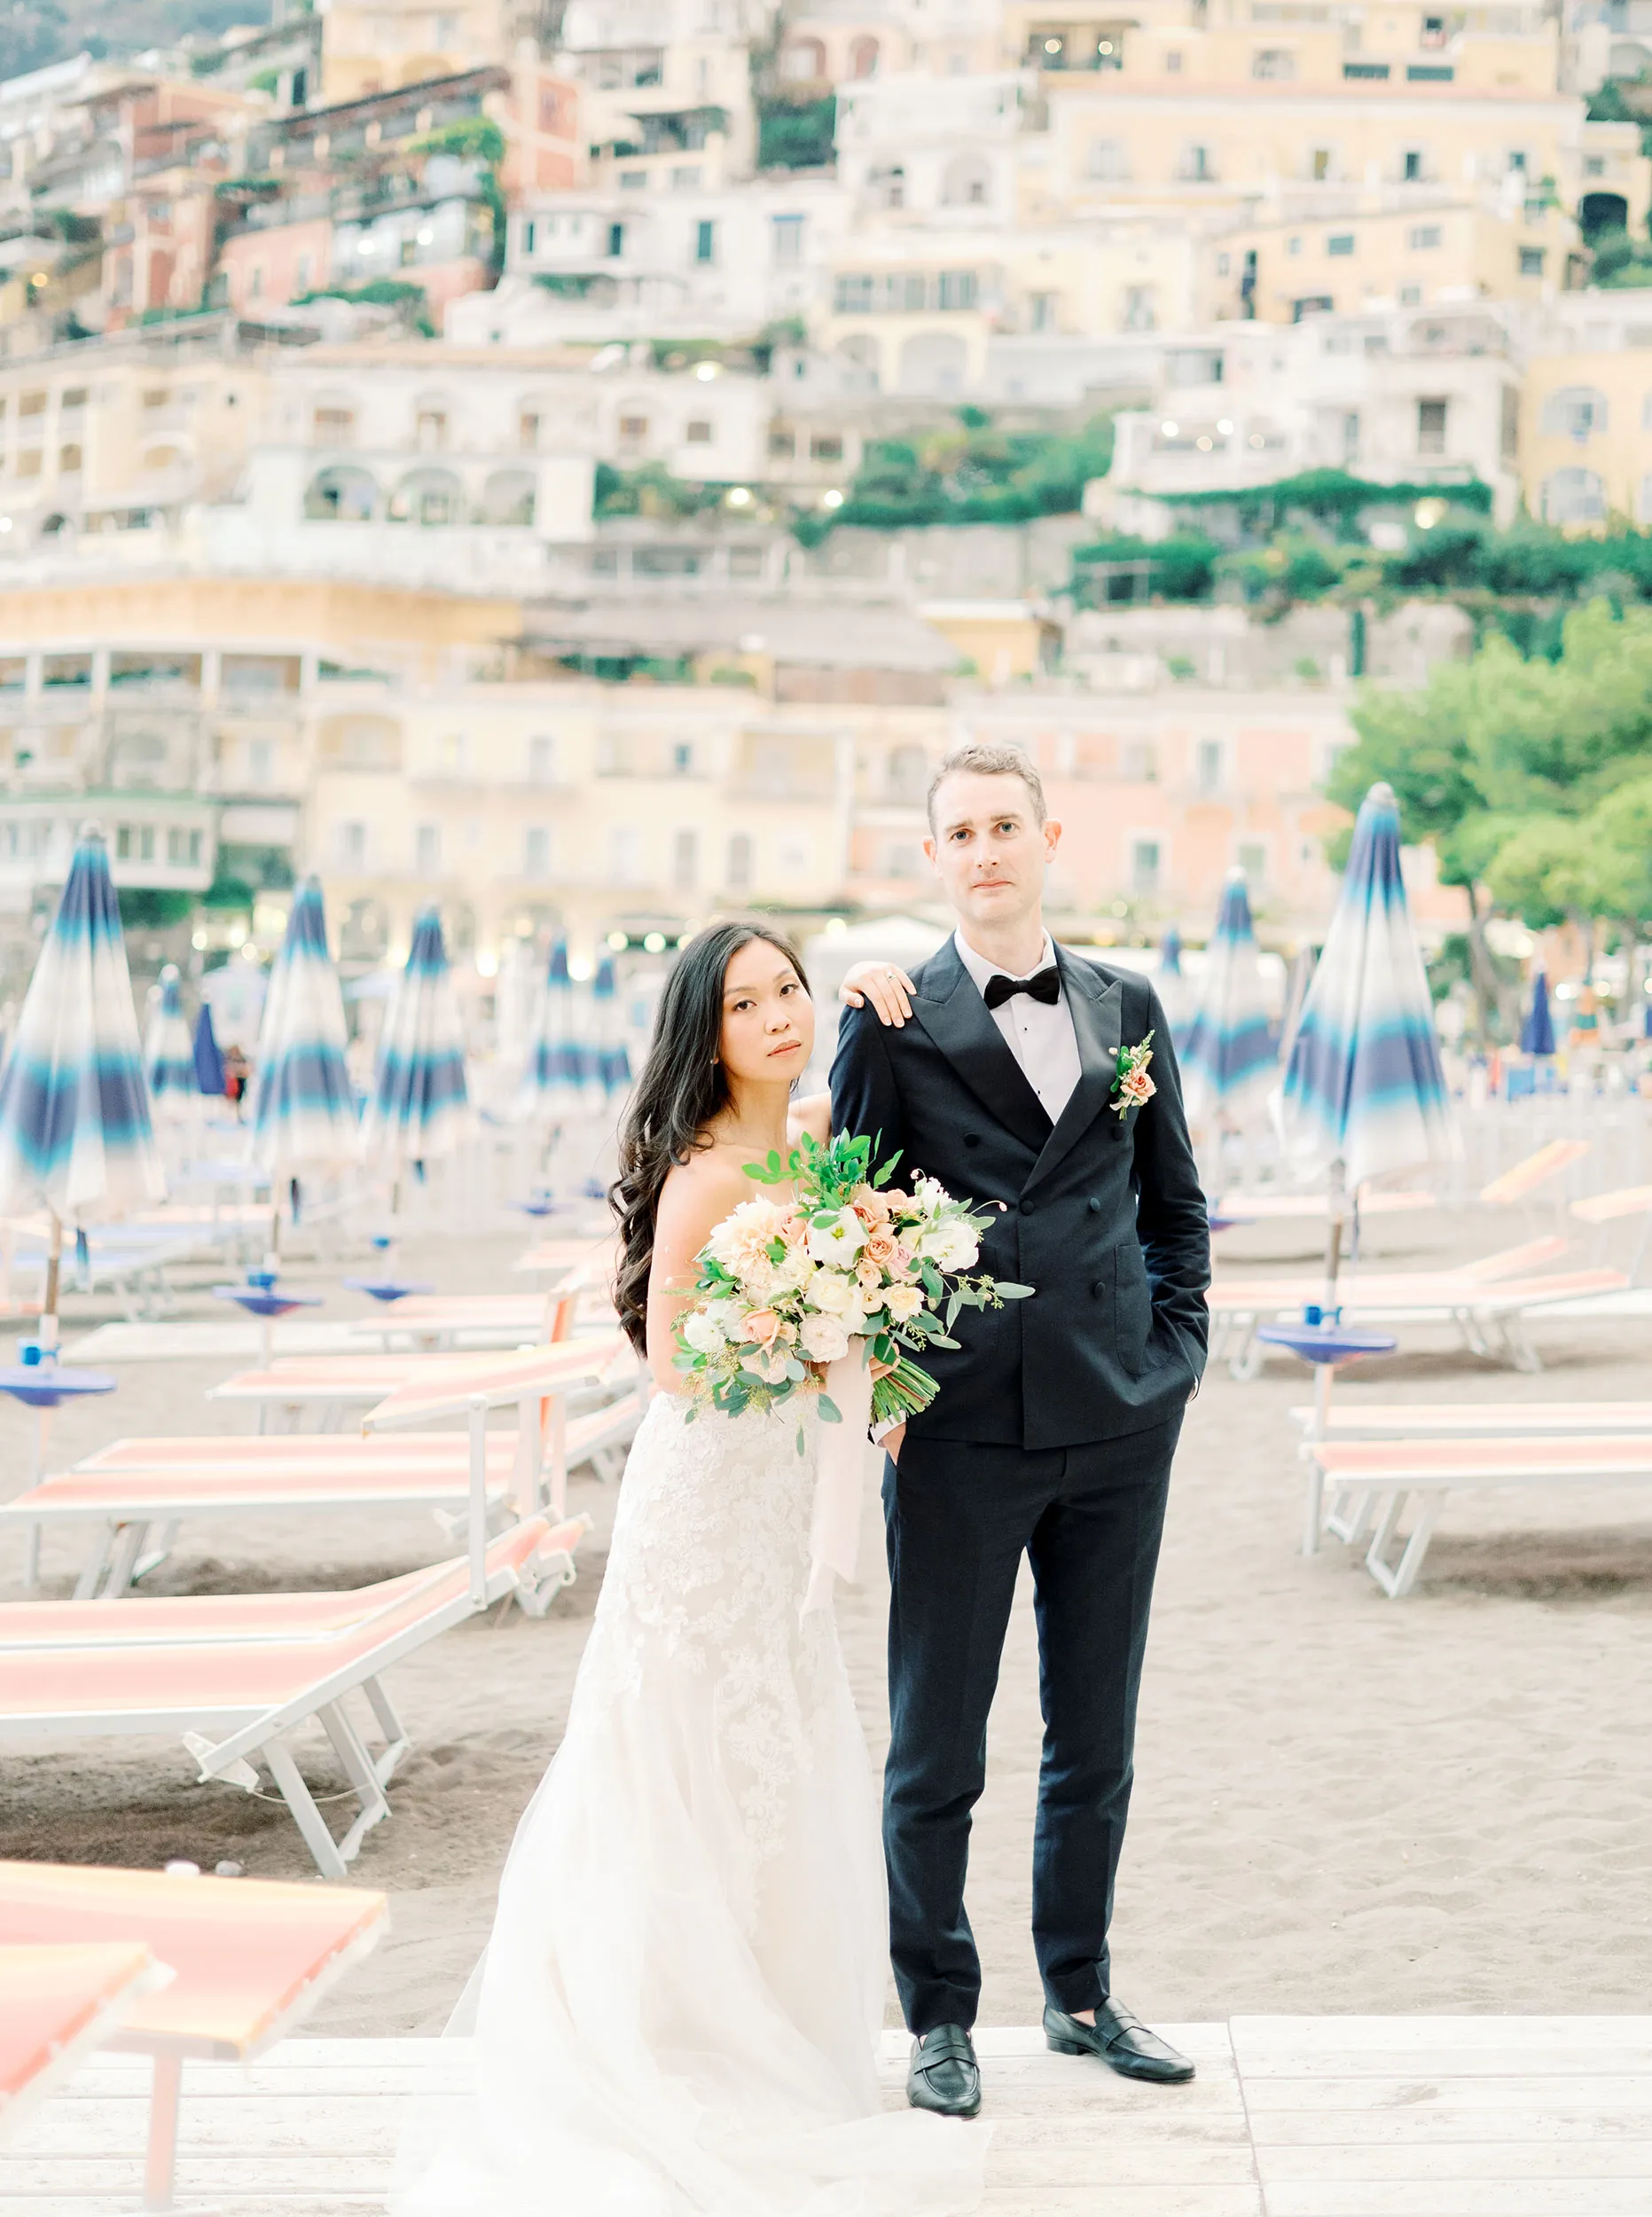 planning a wedding in positano